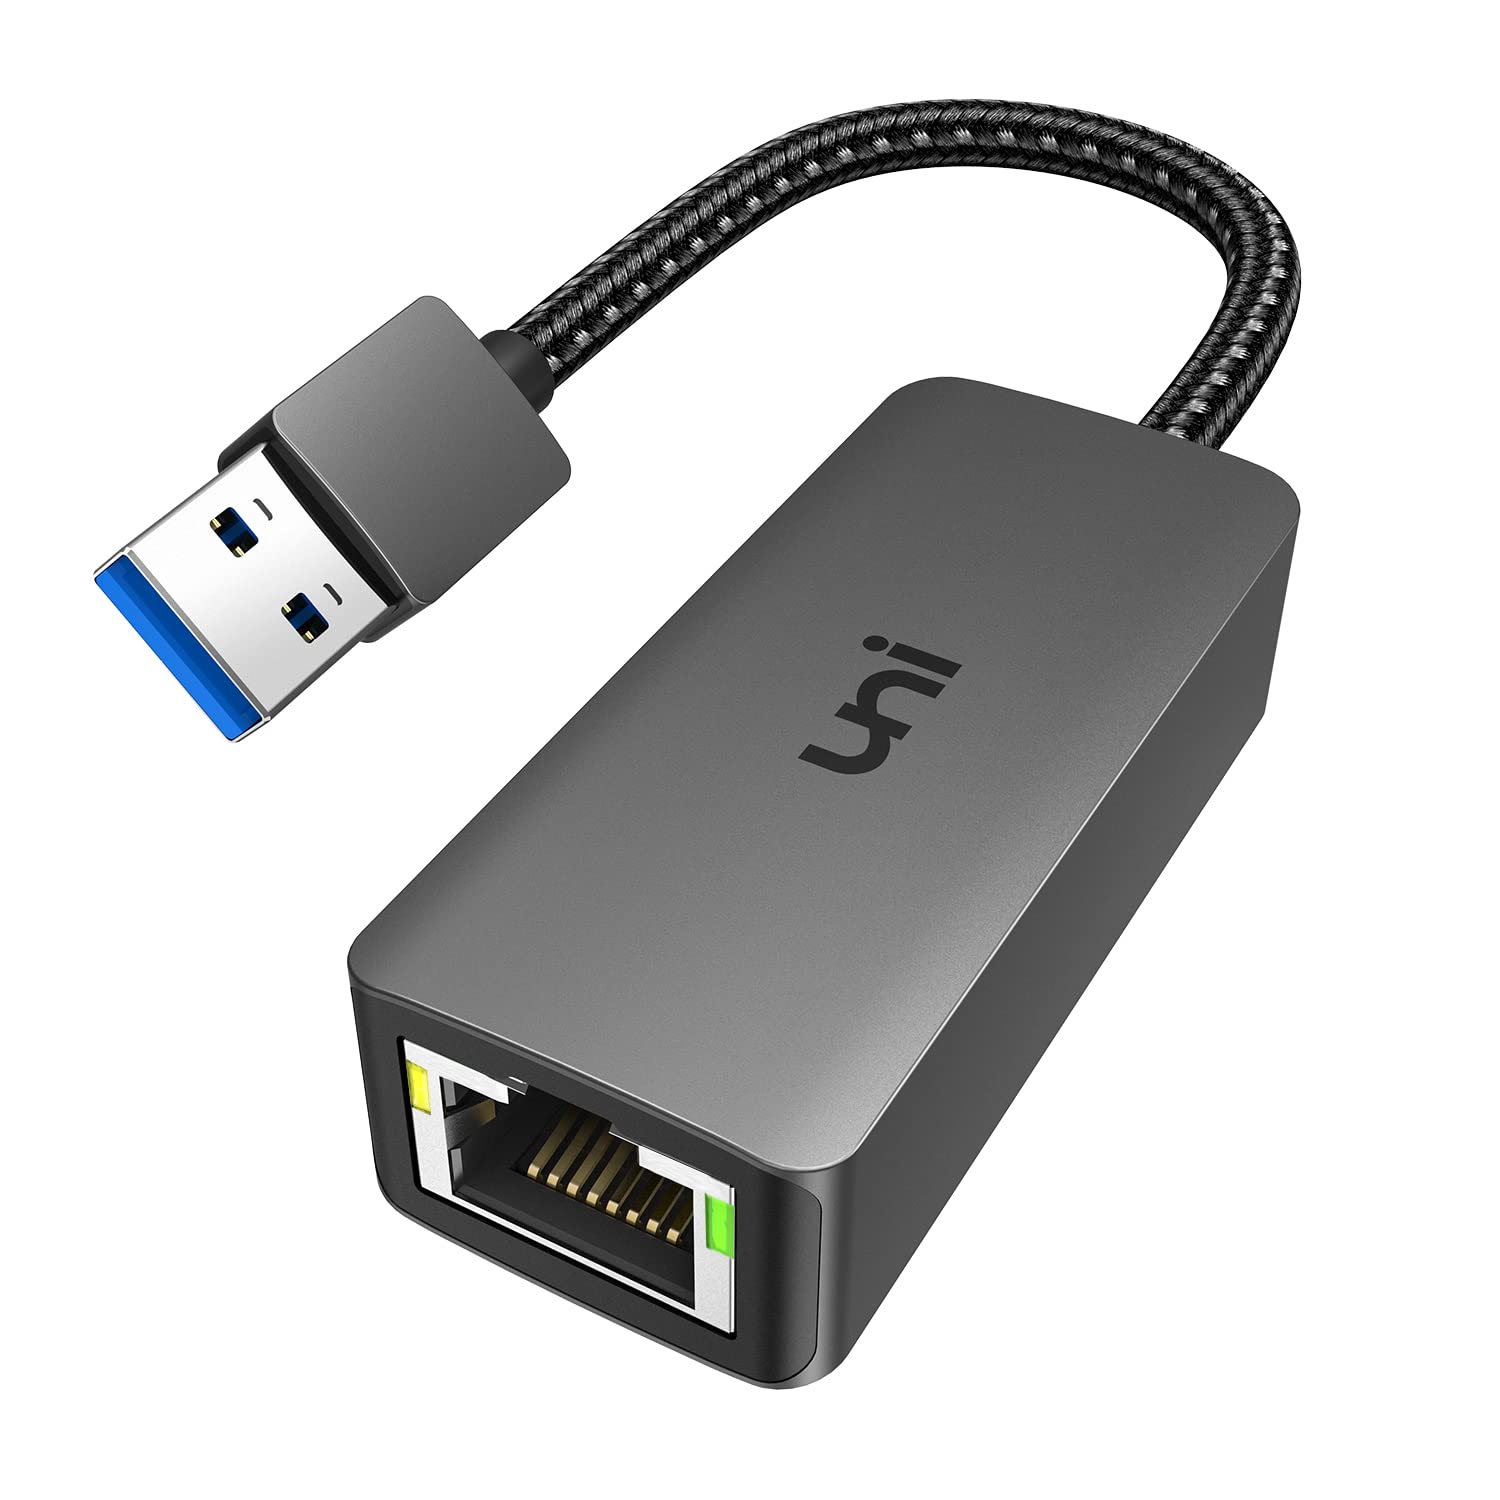 ThinkPad USB 3.0 Ethernet Adapter